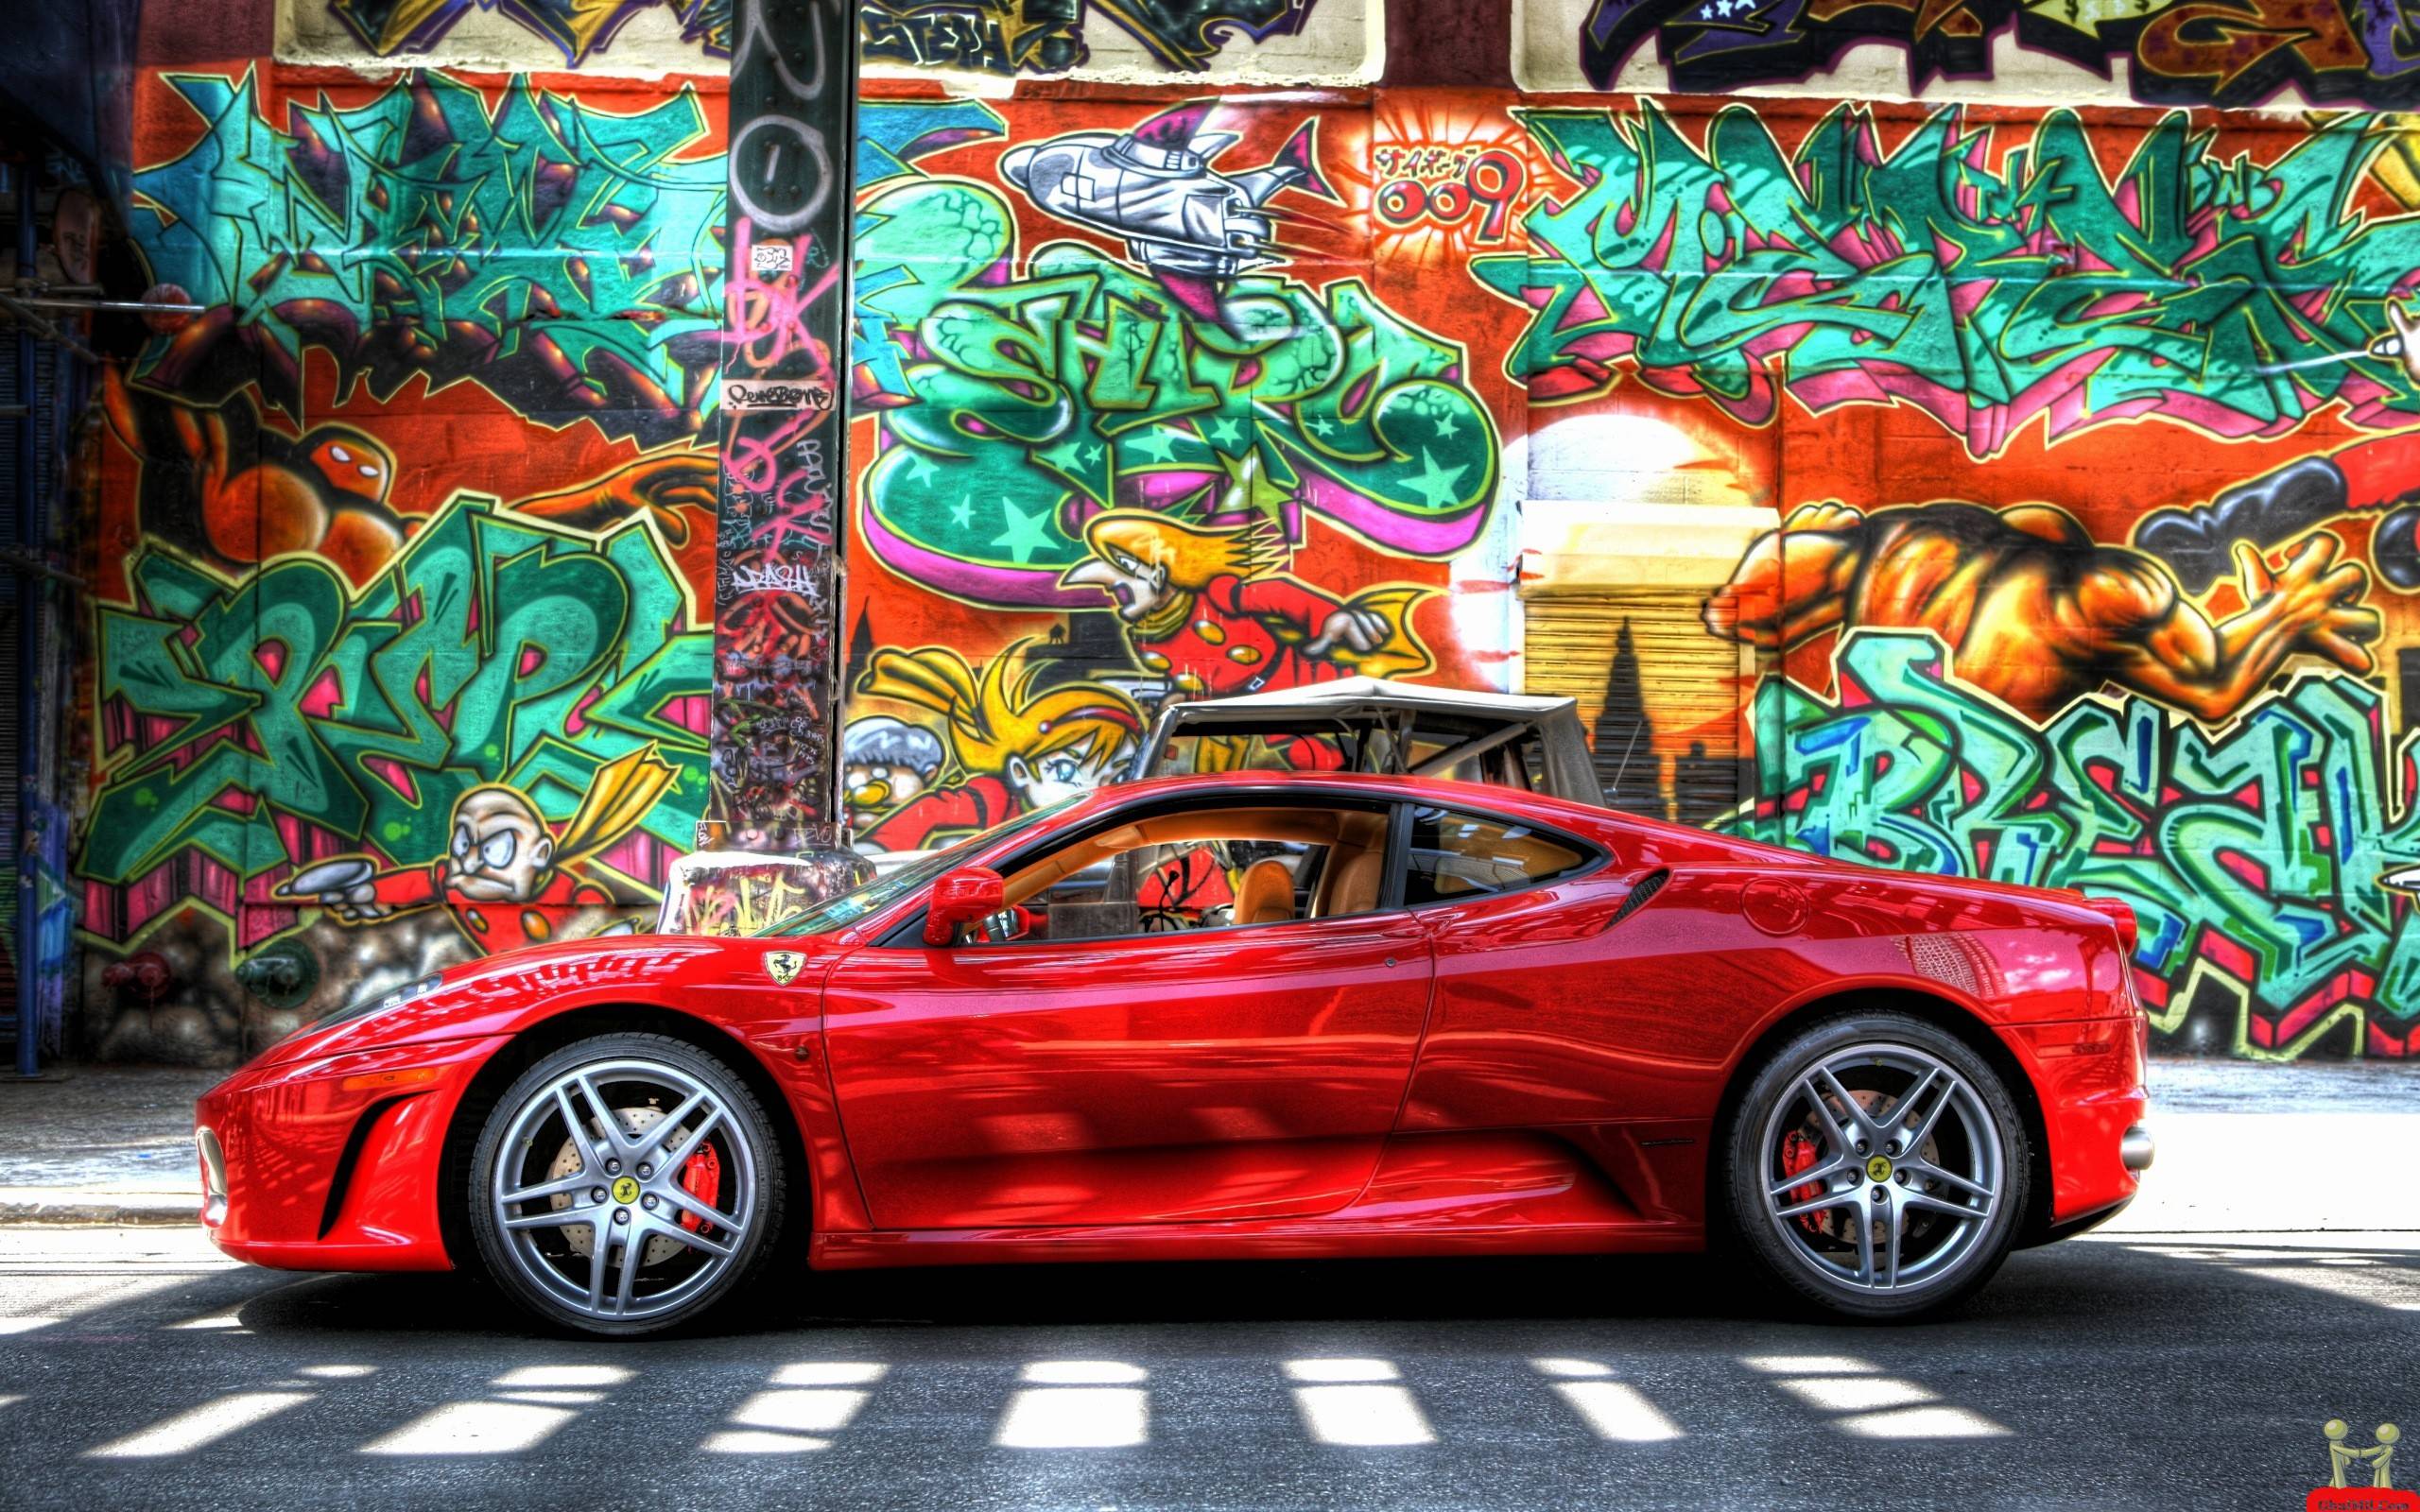 Red Color Ferrari HD Car Wallpaper 2560x1600PX Colorful Cool